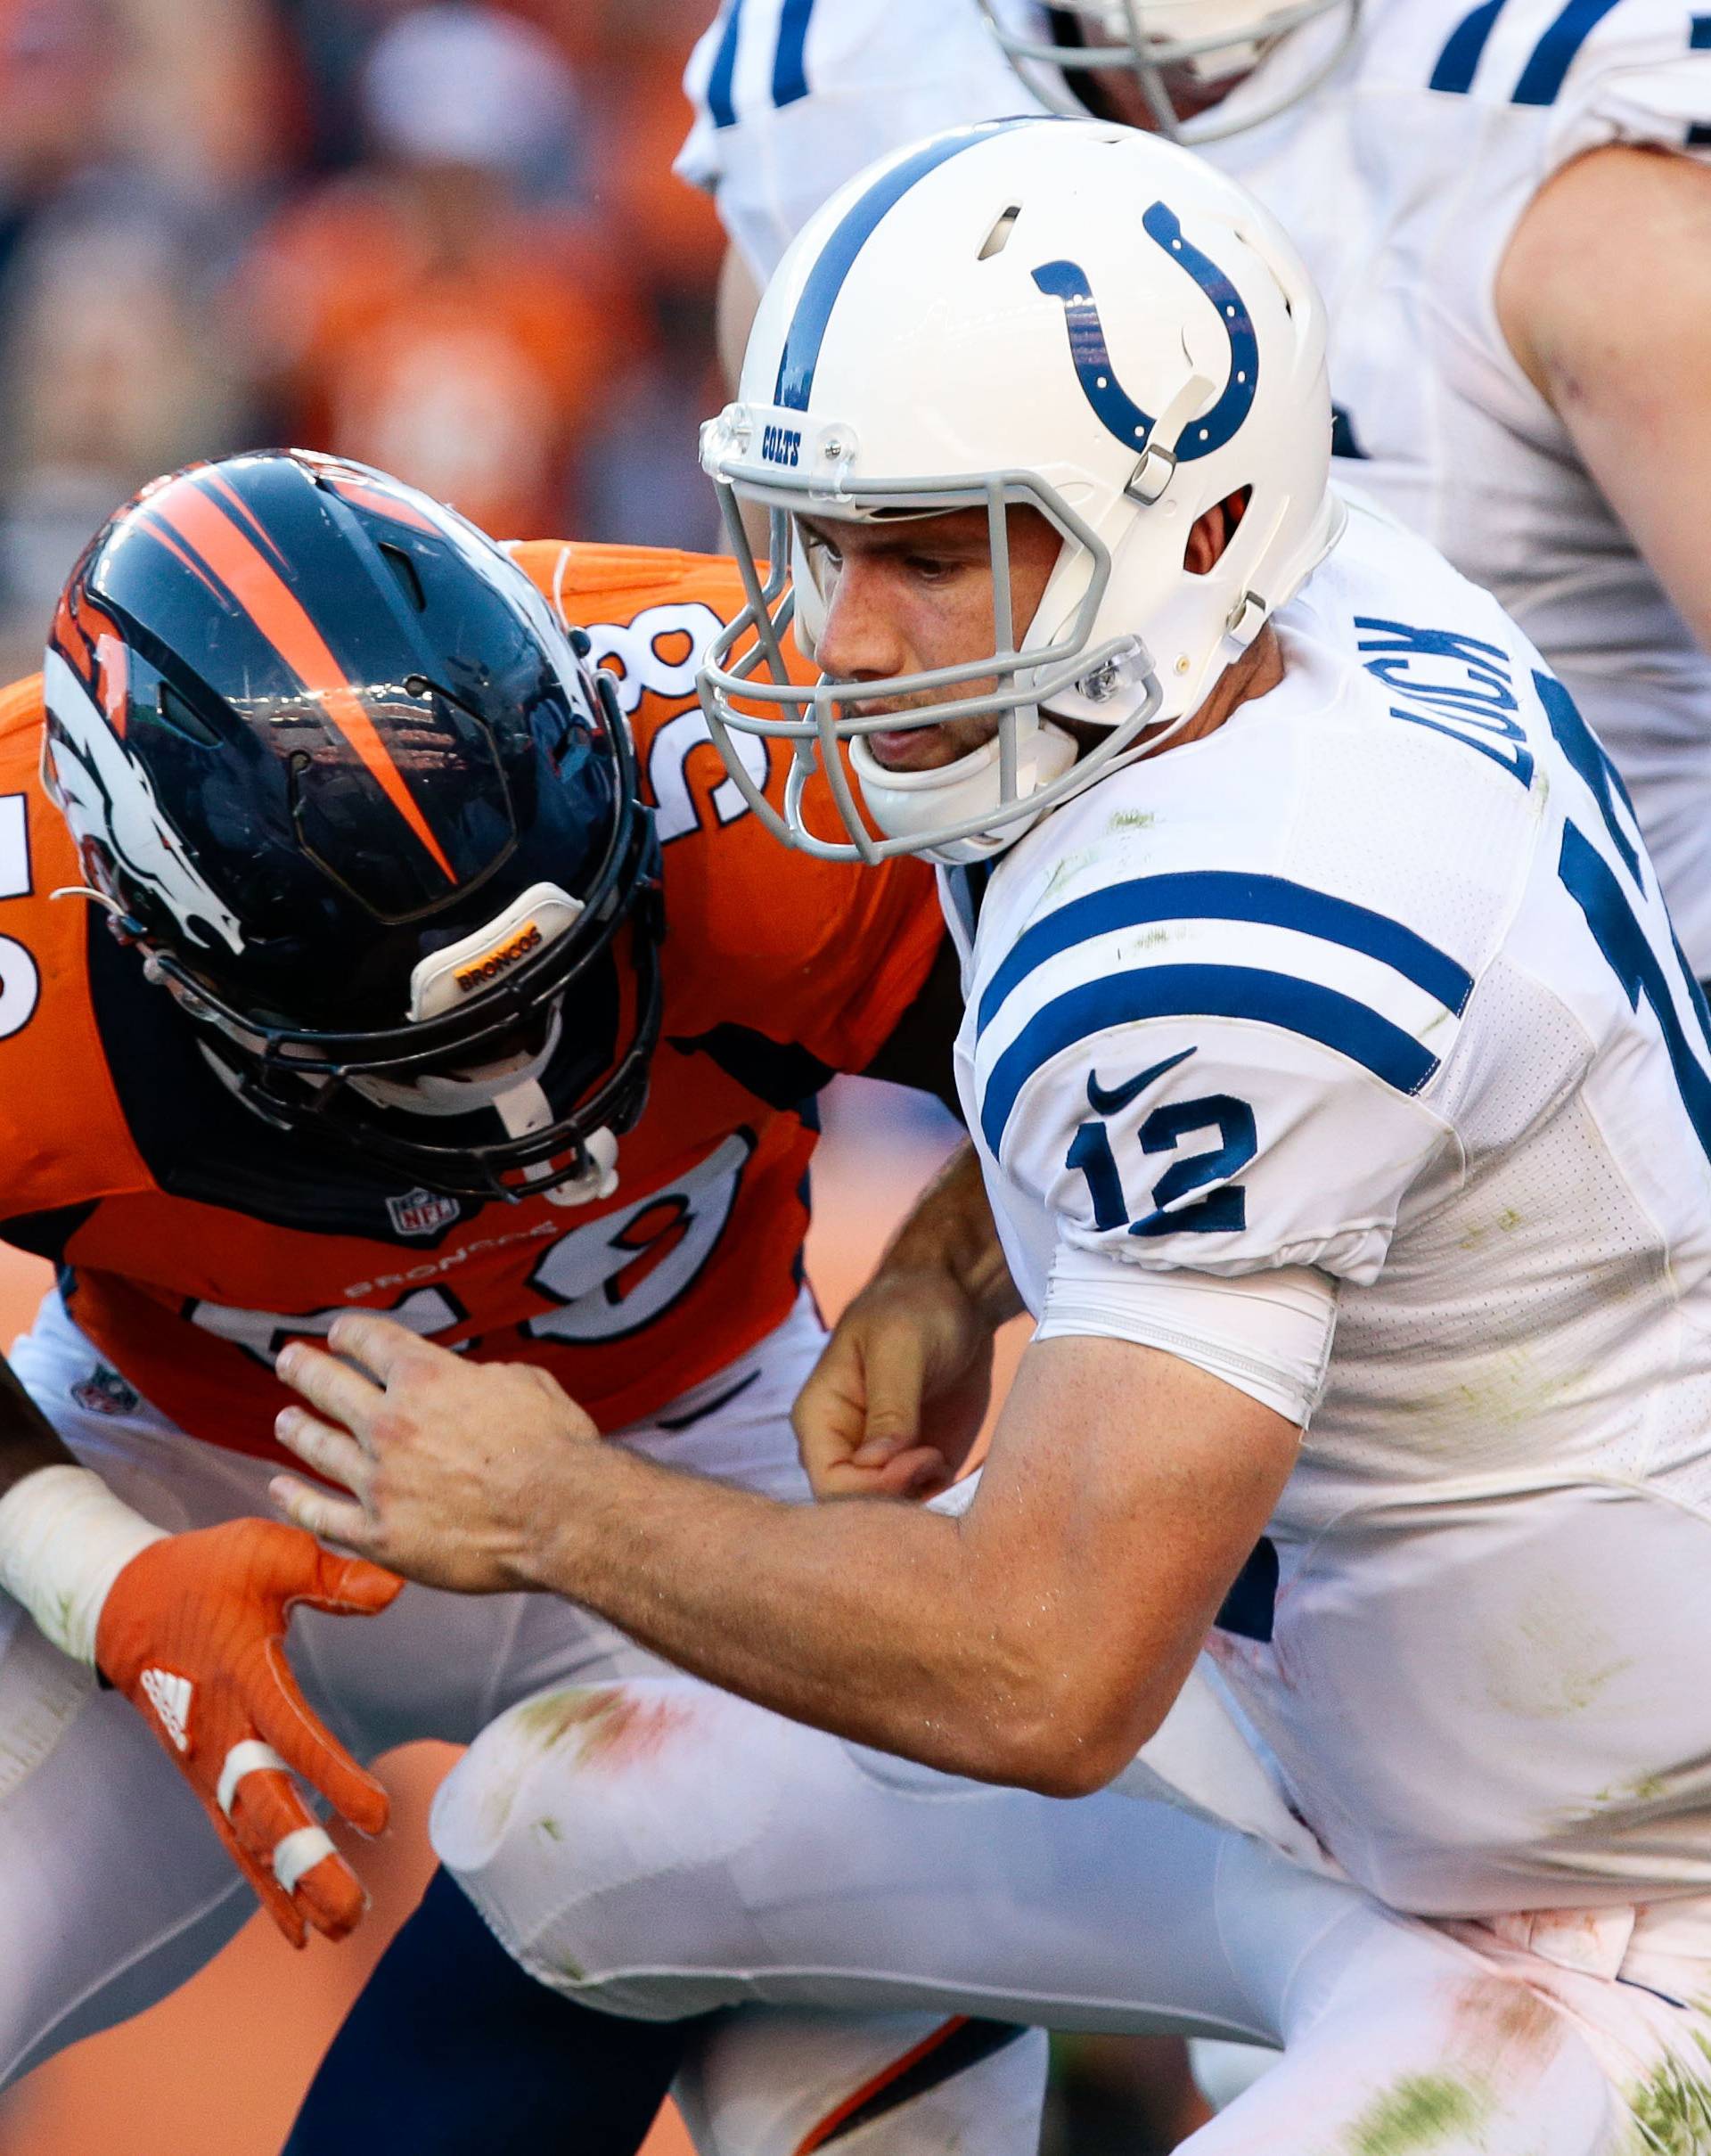 NFL: Indianapolis Colts at Denver Broncos